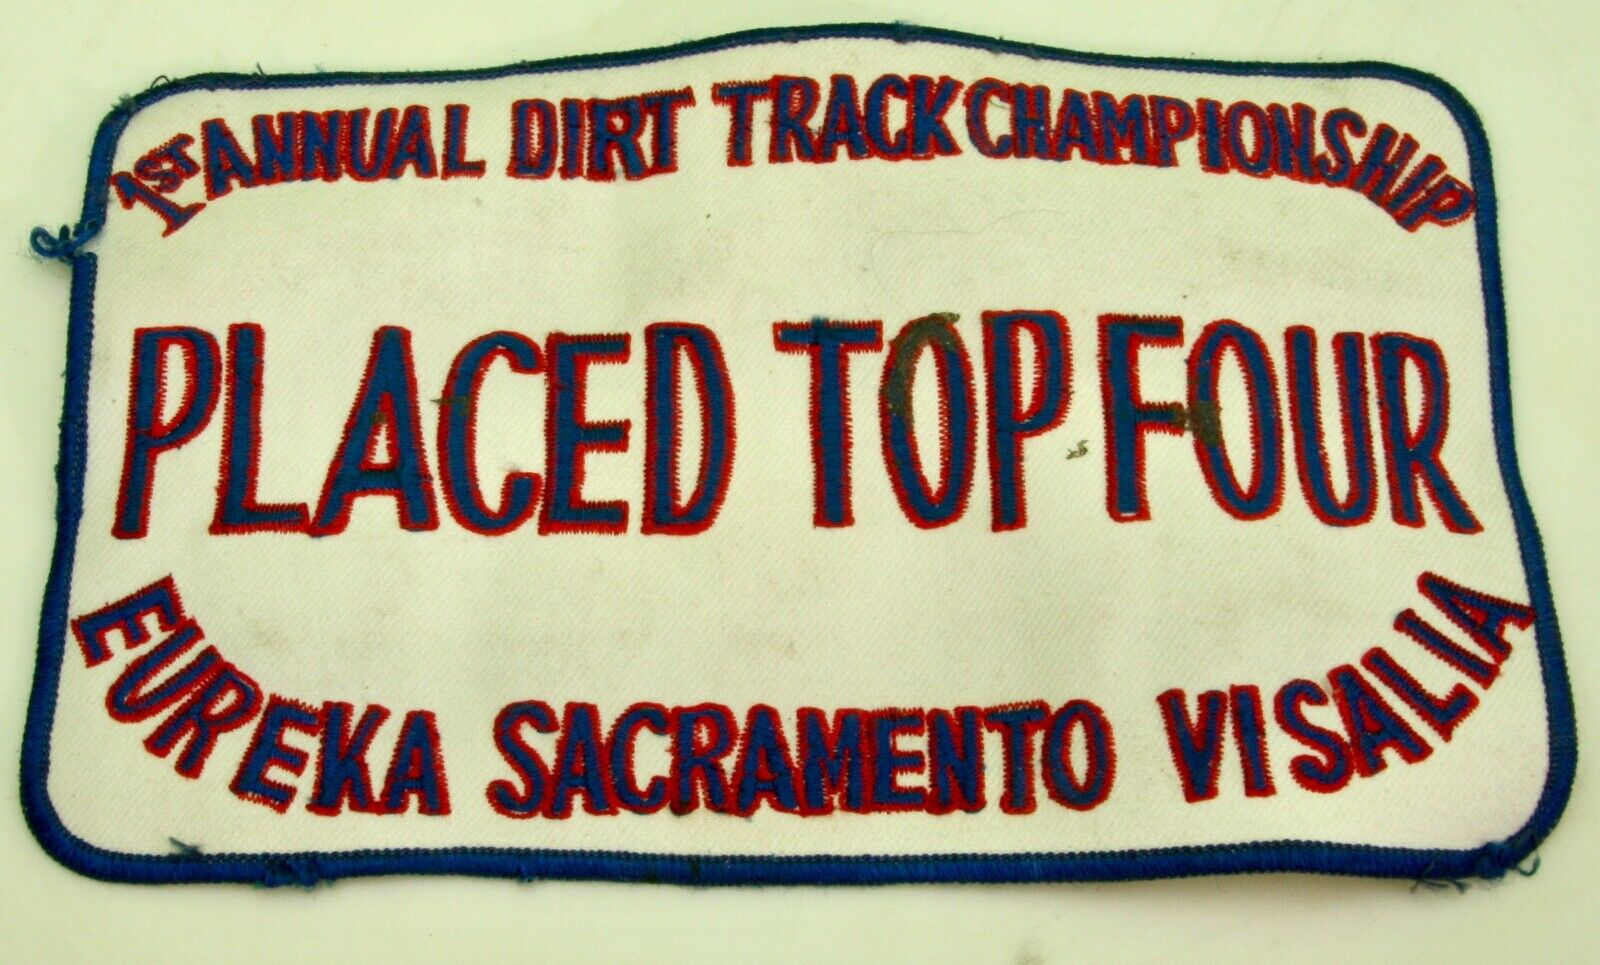 1st Annual Dirt Track Championship Top 4, Eureka-Visalia-Sacremento VINTAGE 